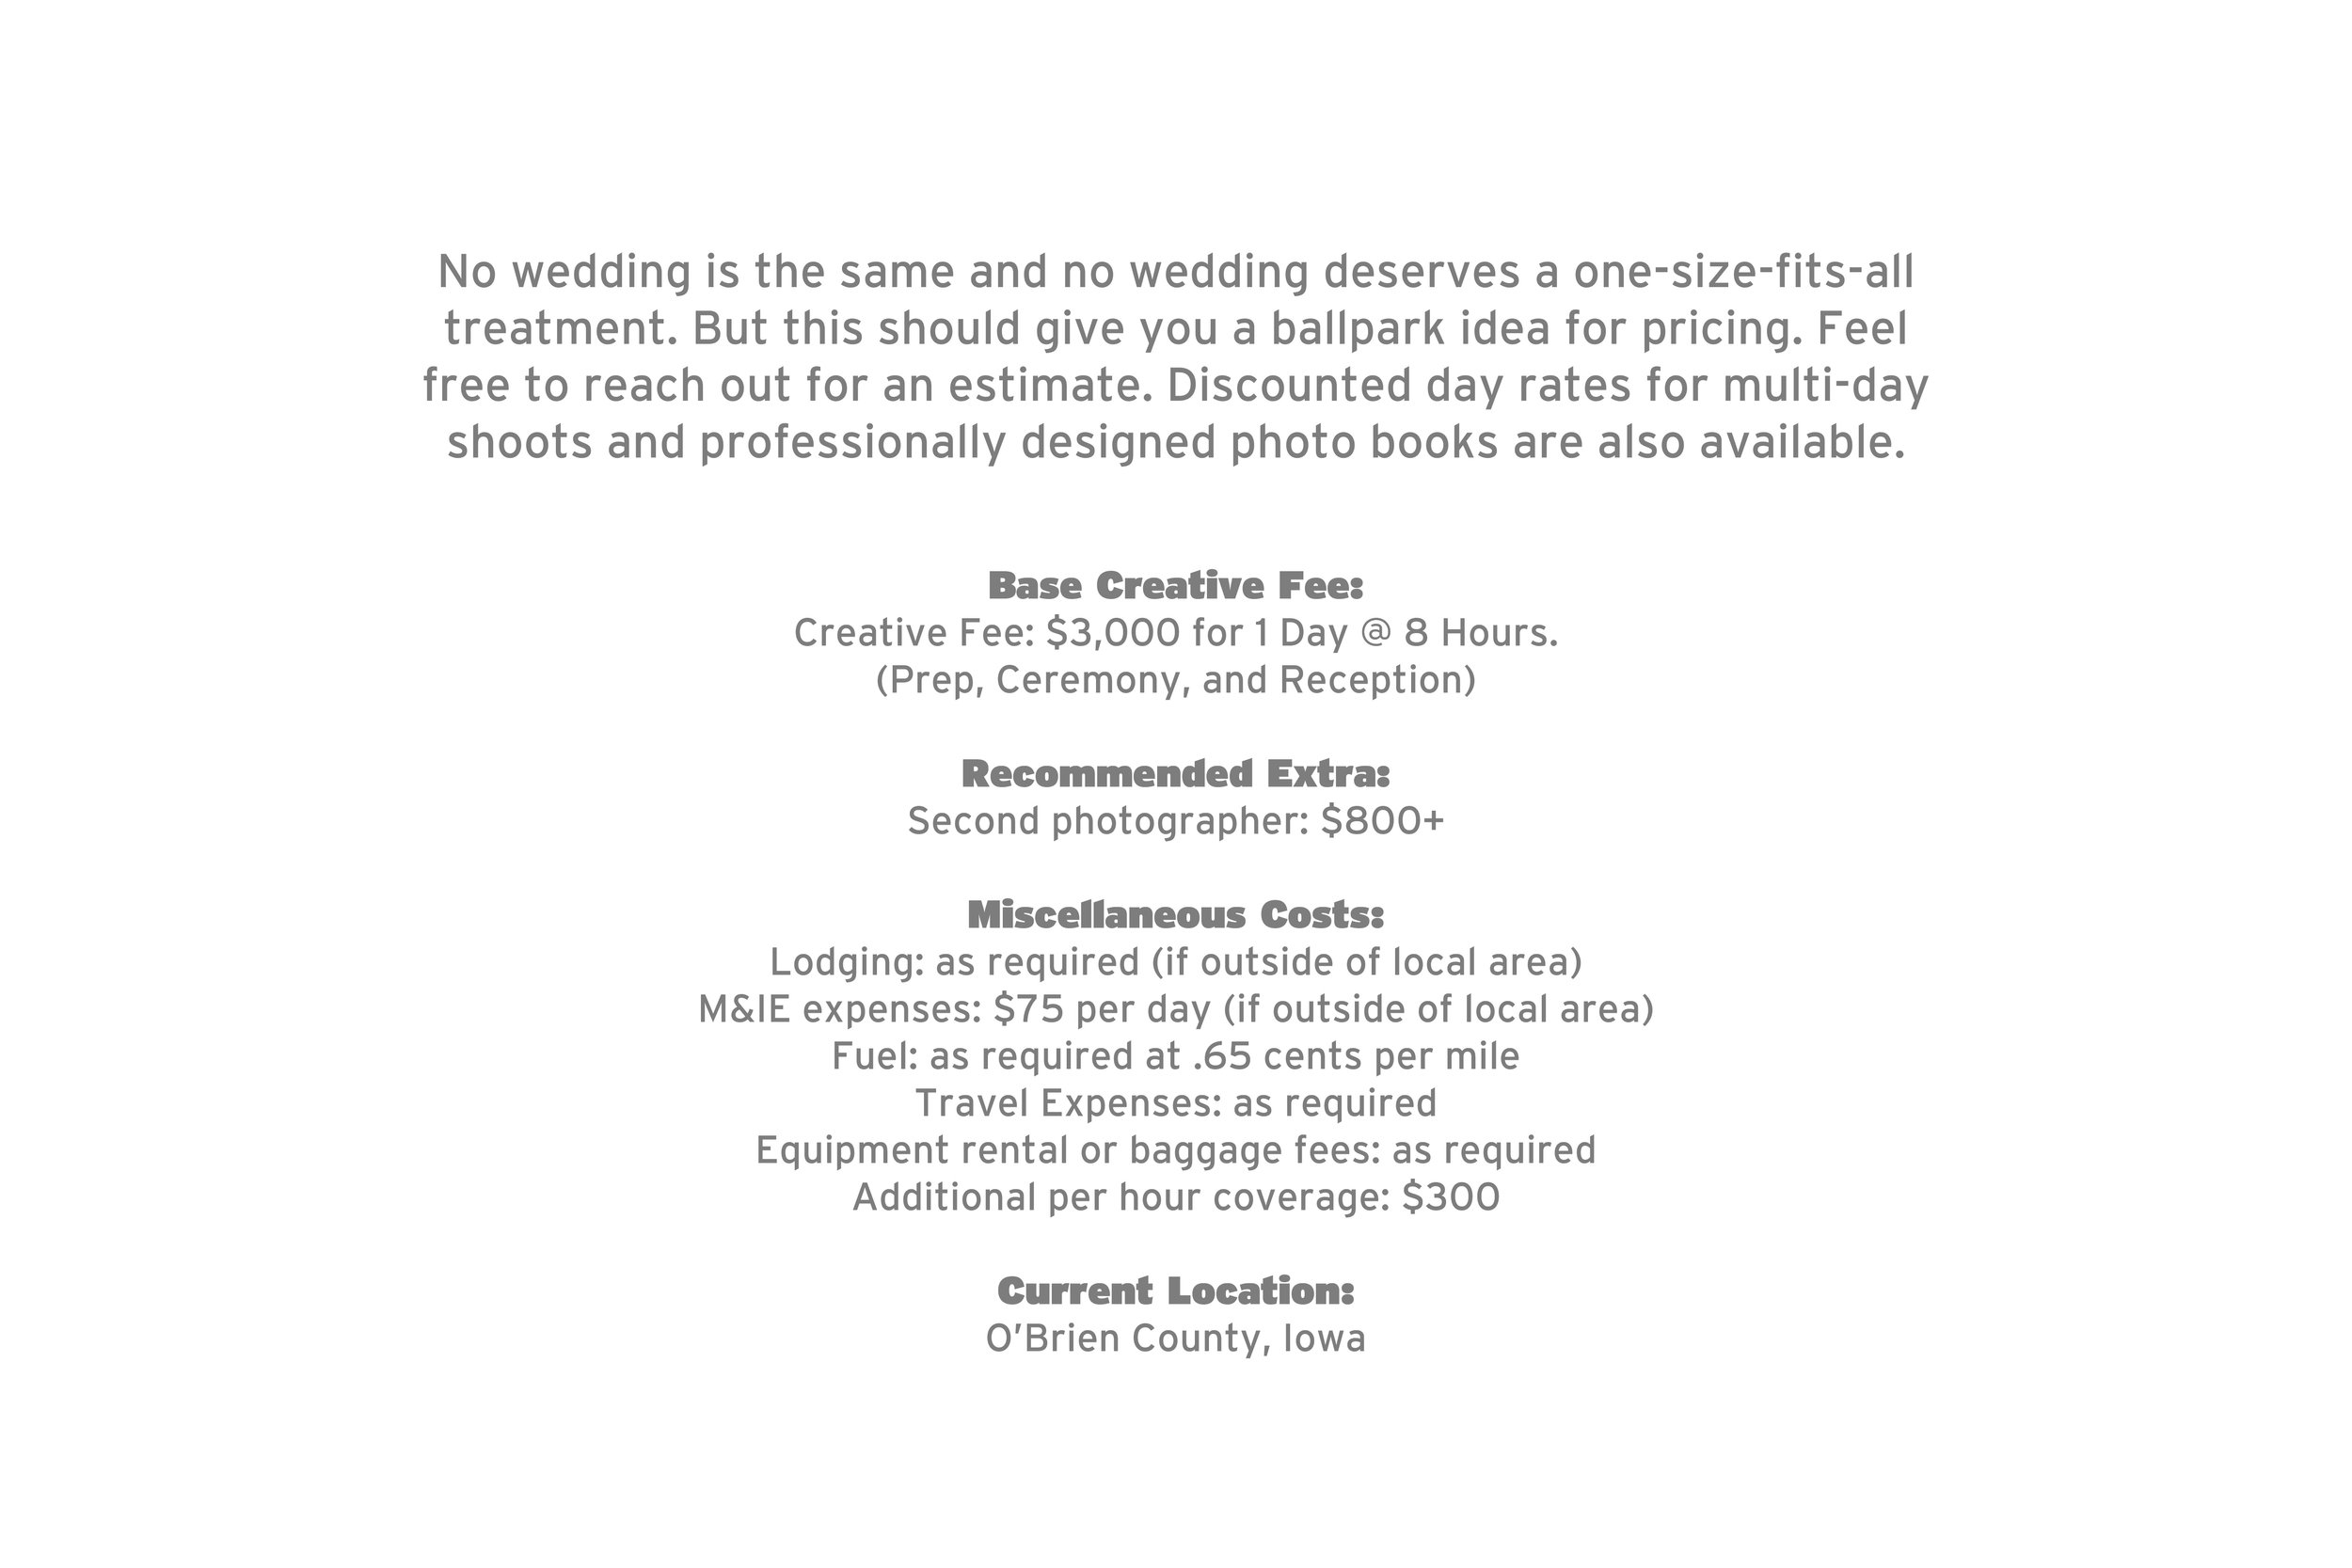 Wedding Pricing Slide.jpg